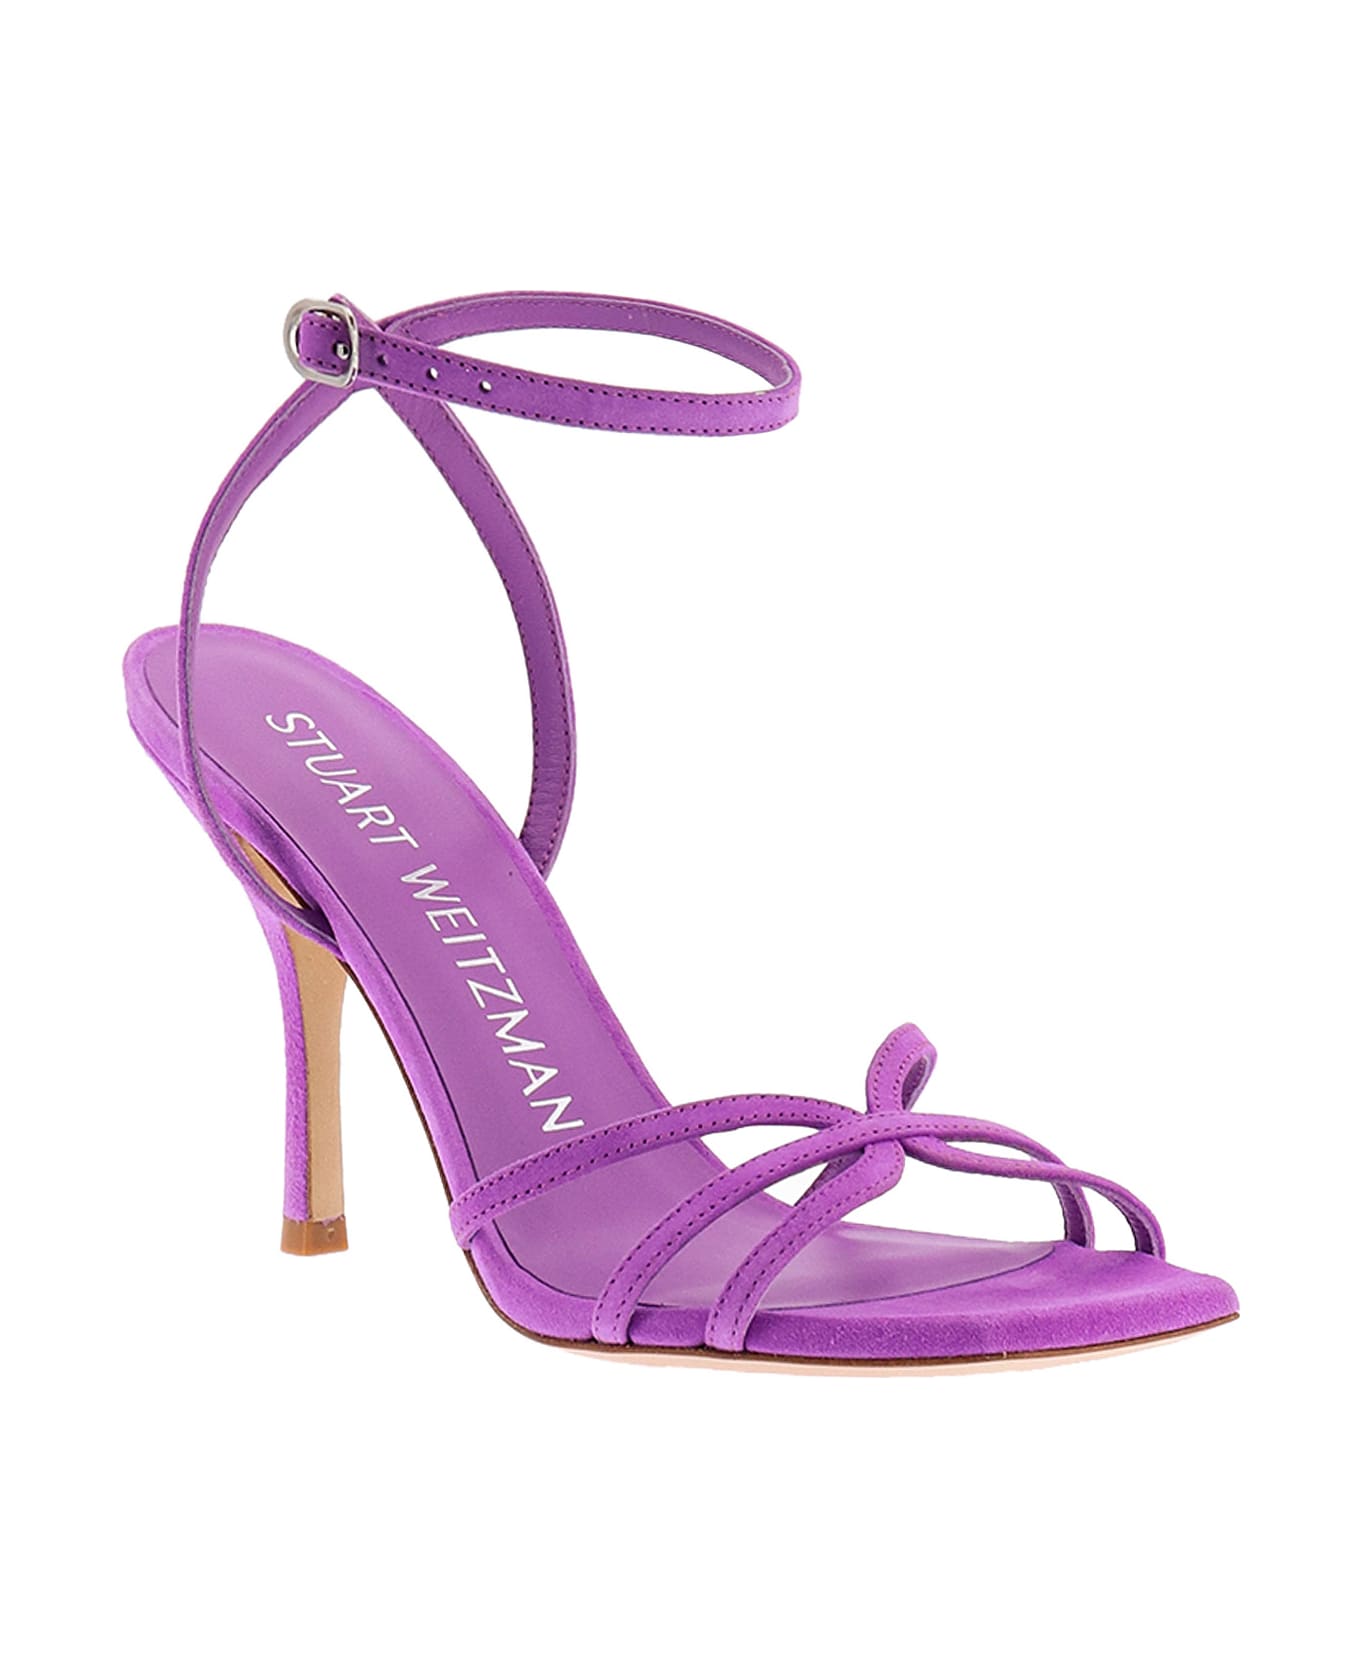 Stuart Weitzman Barelythere 100 Sandals - Purple